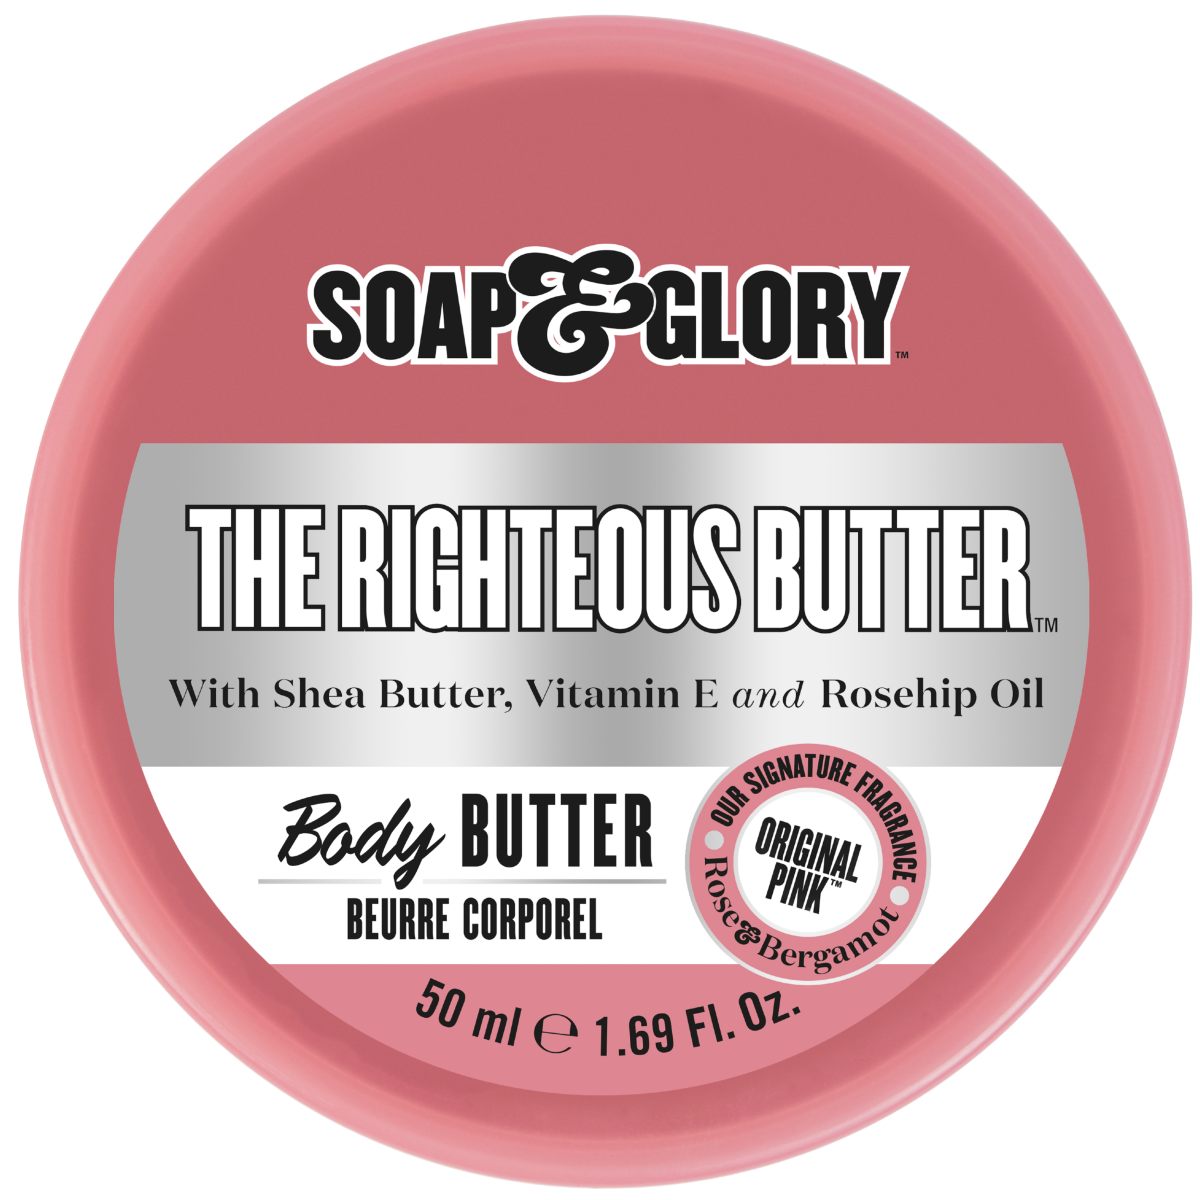 Soap & Glory Original Pink The Righteous Butter Moisturising Body Butter Mini Travel Size